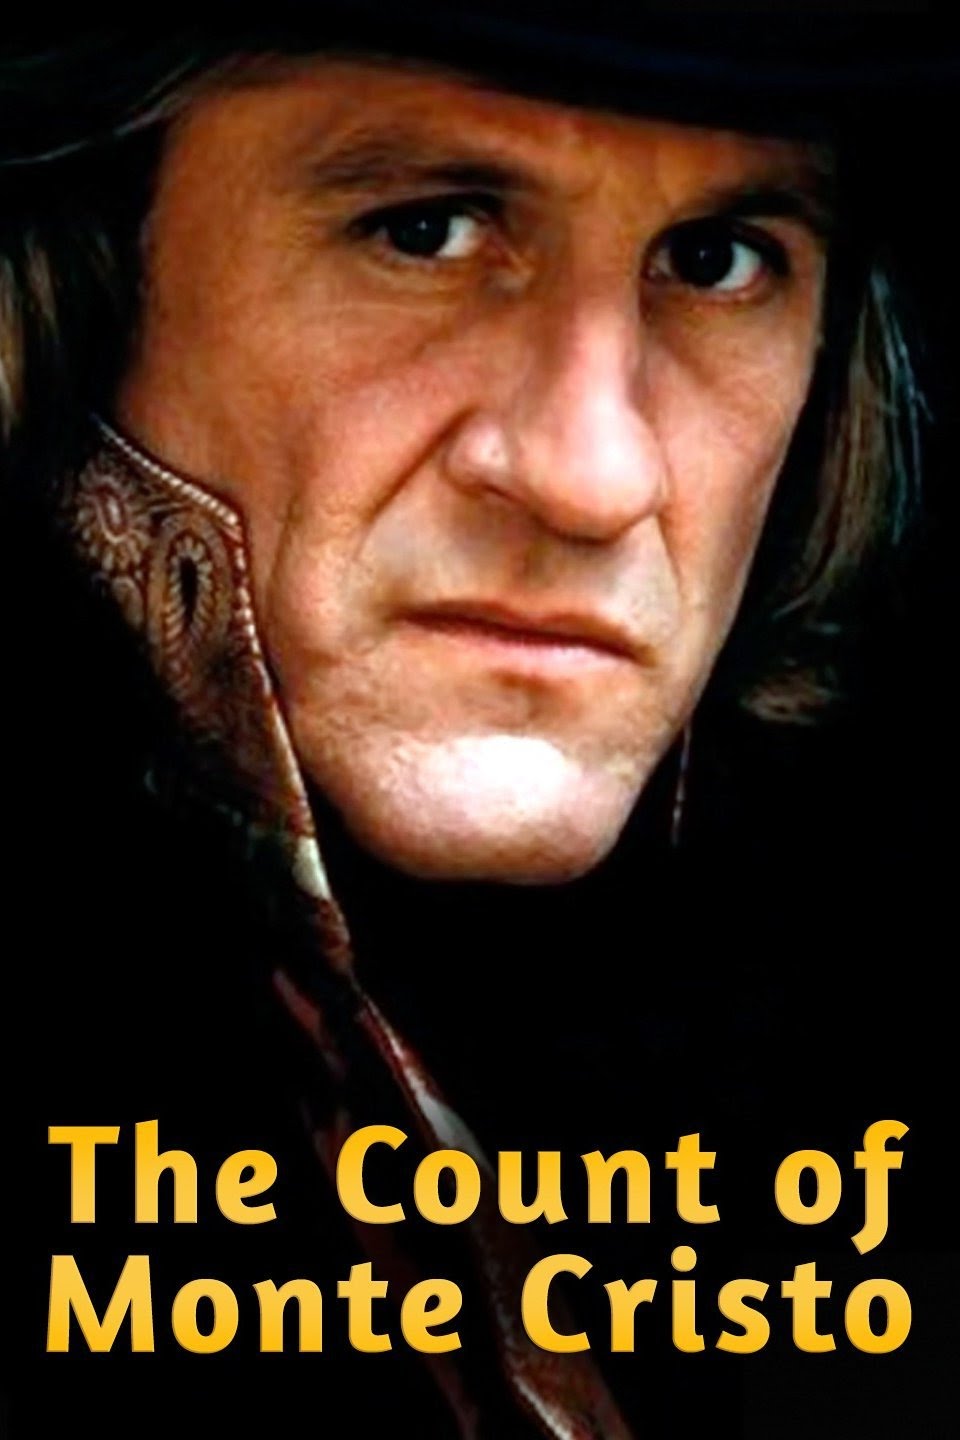 مشاهدة مسلسل 1998 The Count of Monte Cristo / Le Comte de Monte Cristo الحلقة الثانية 2 مترجمة